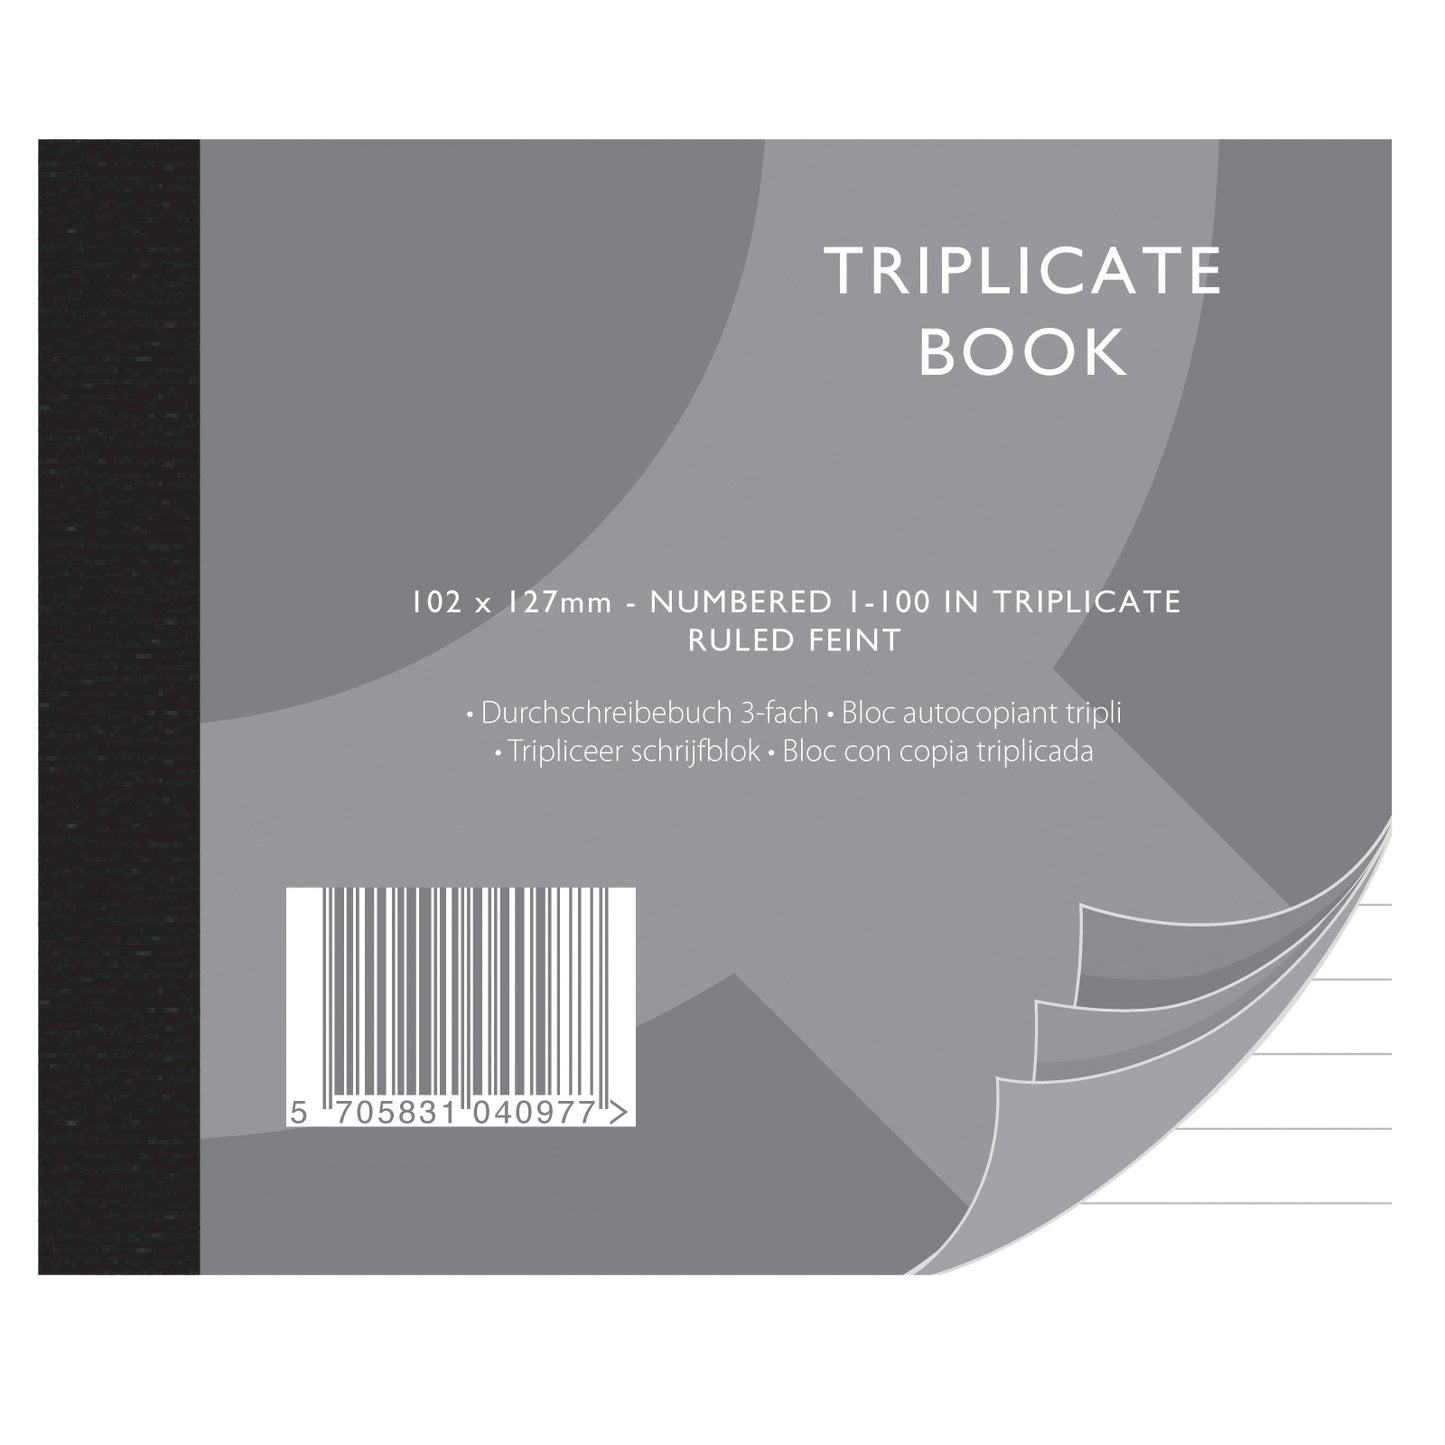 Select Triplicate Book 102x127mm